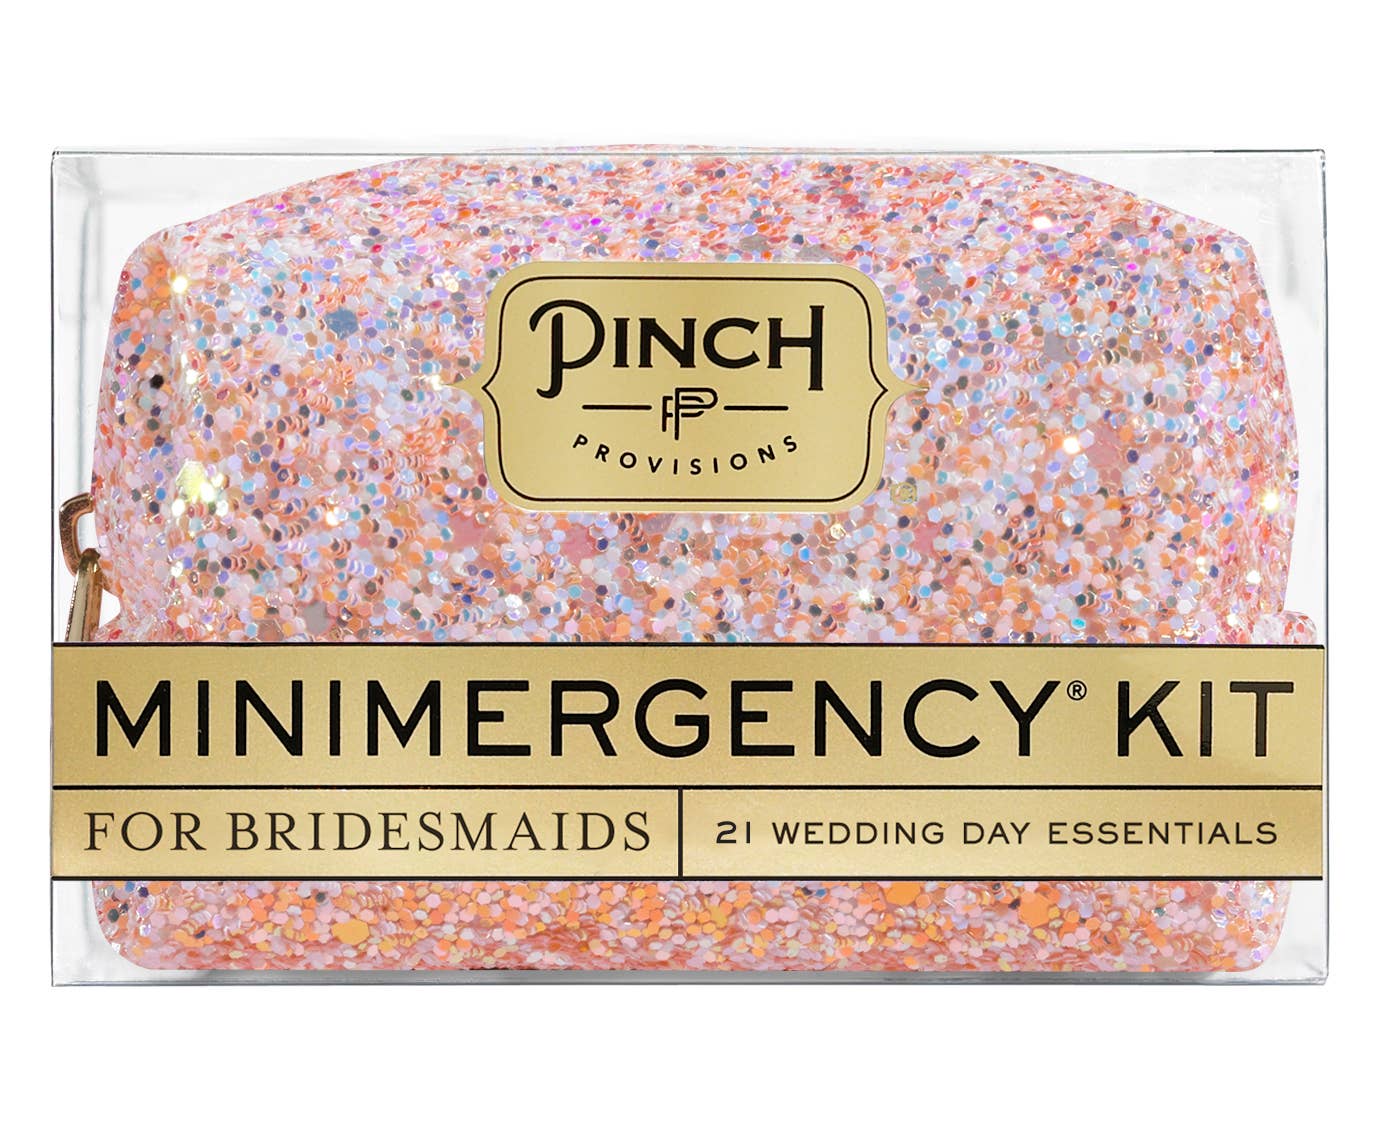 Minimergency Kit for Bridesmaids: White Iridescent